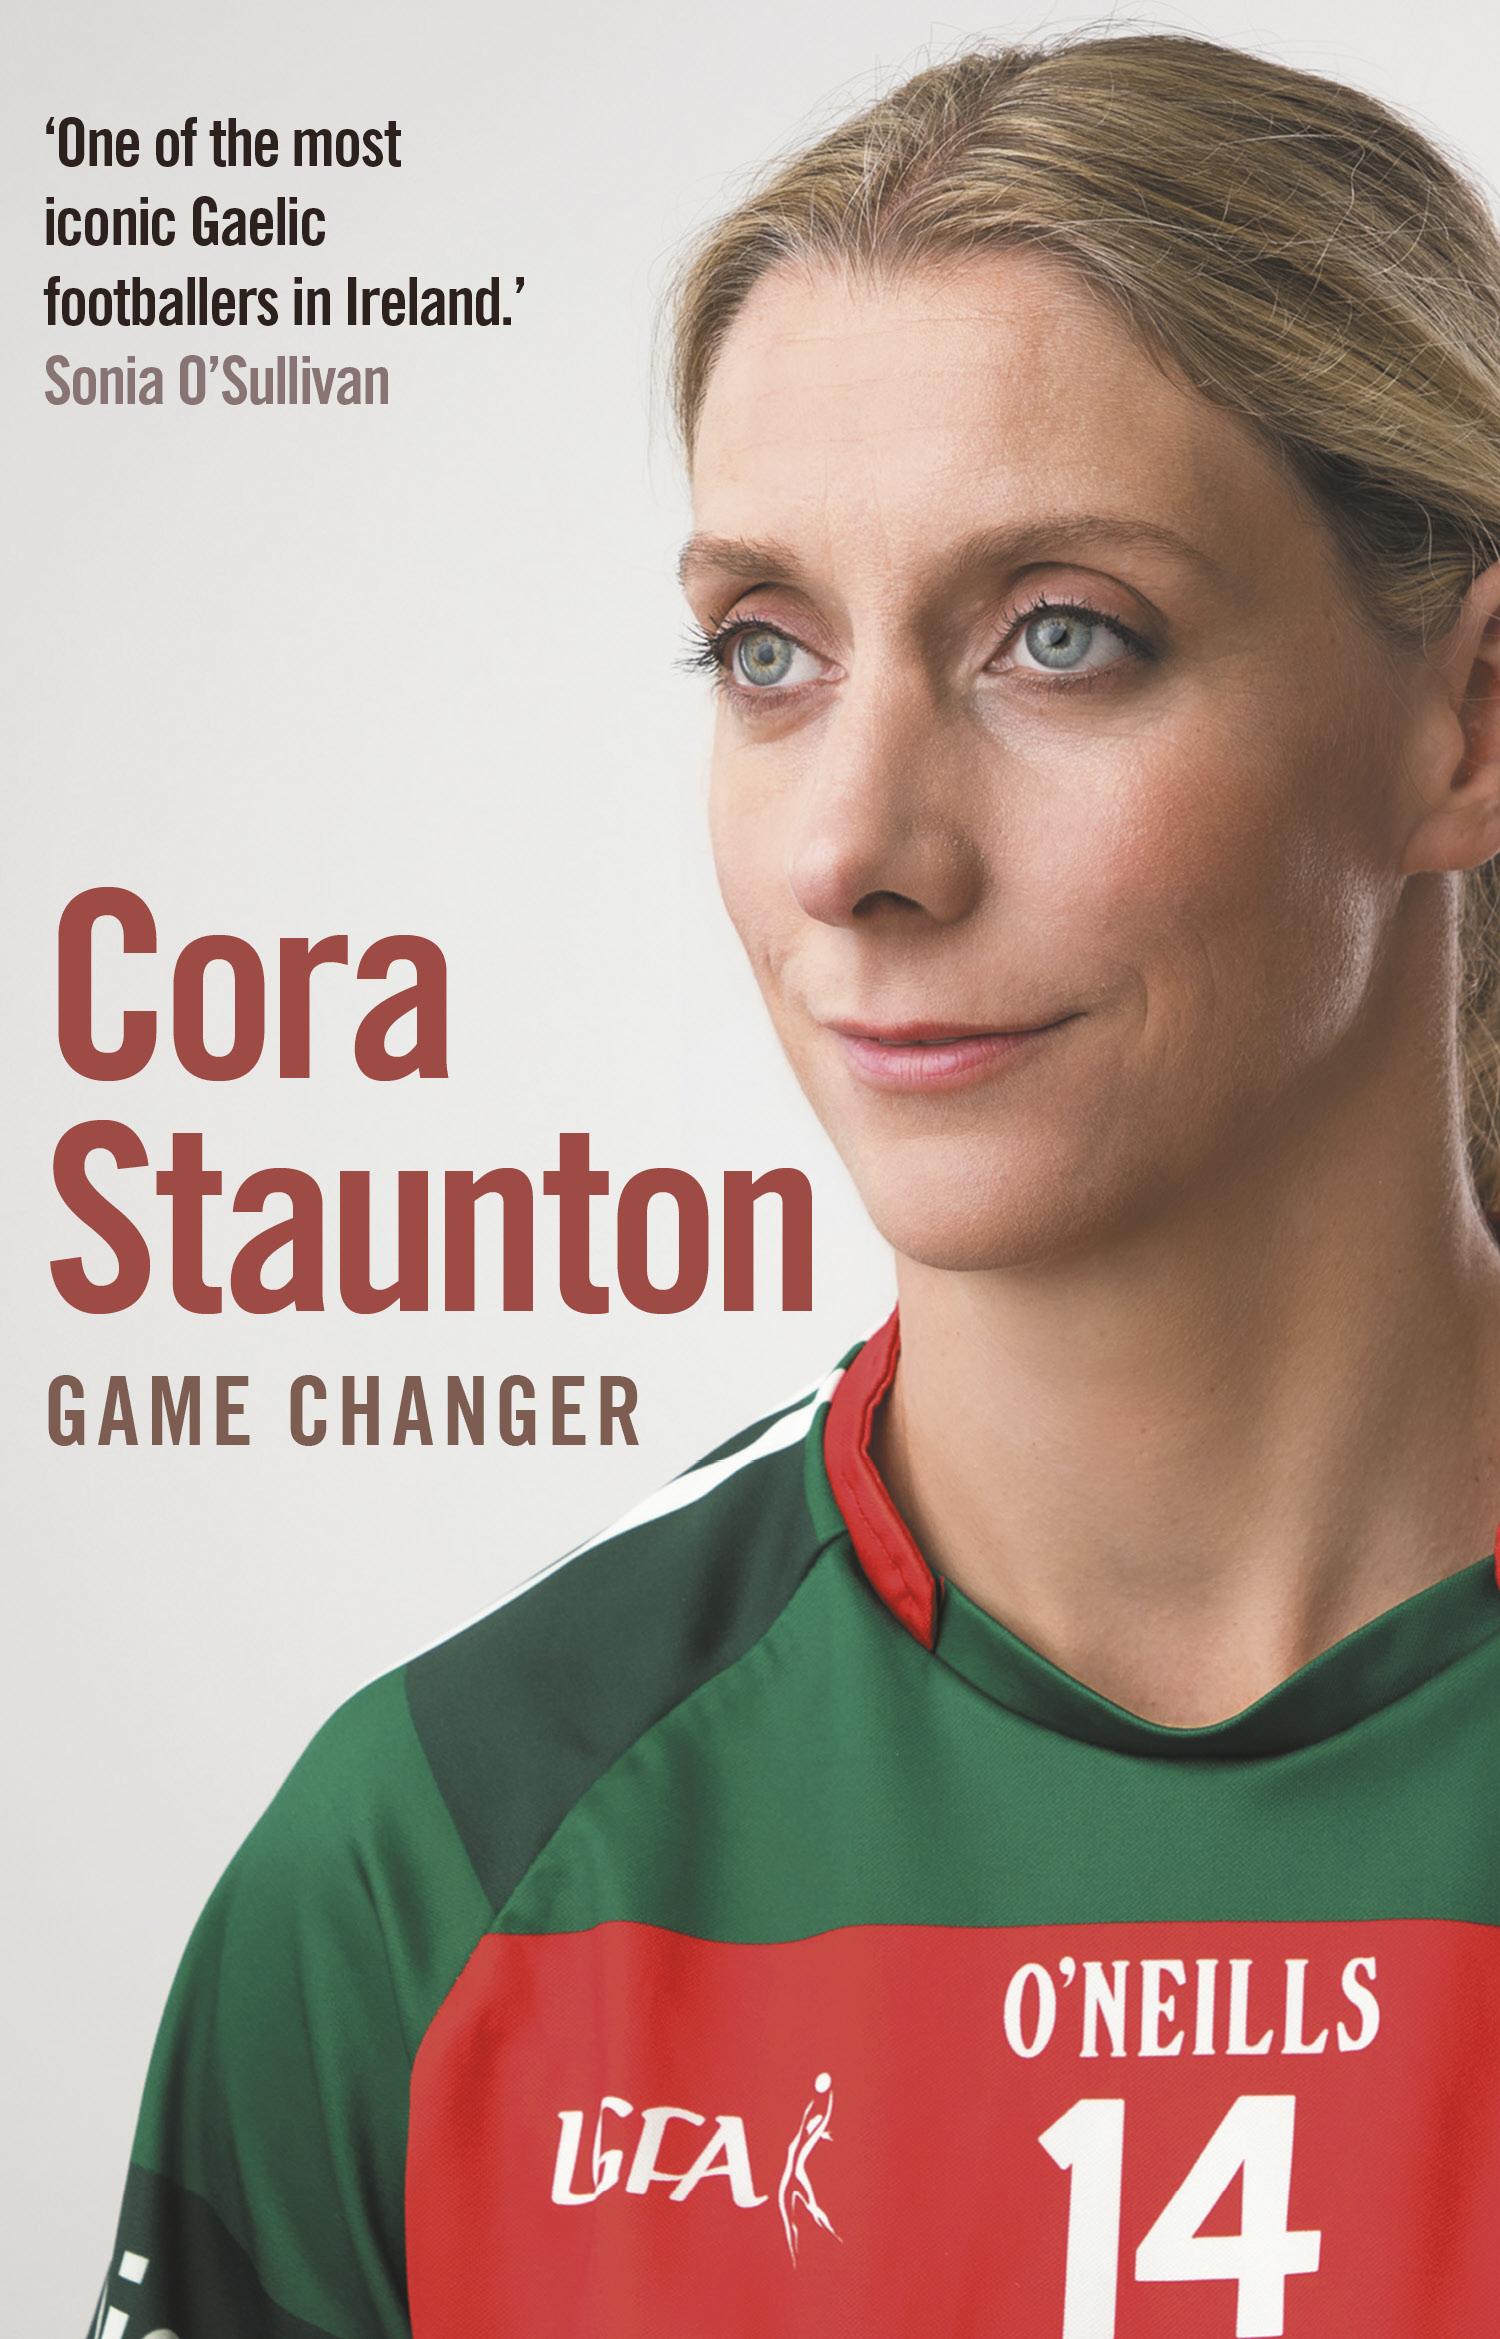 Game Changer - Cora Staunton